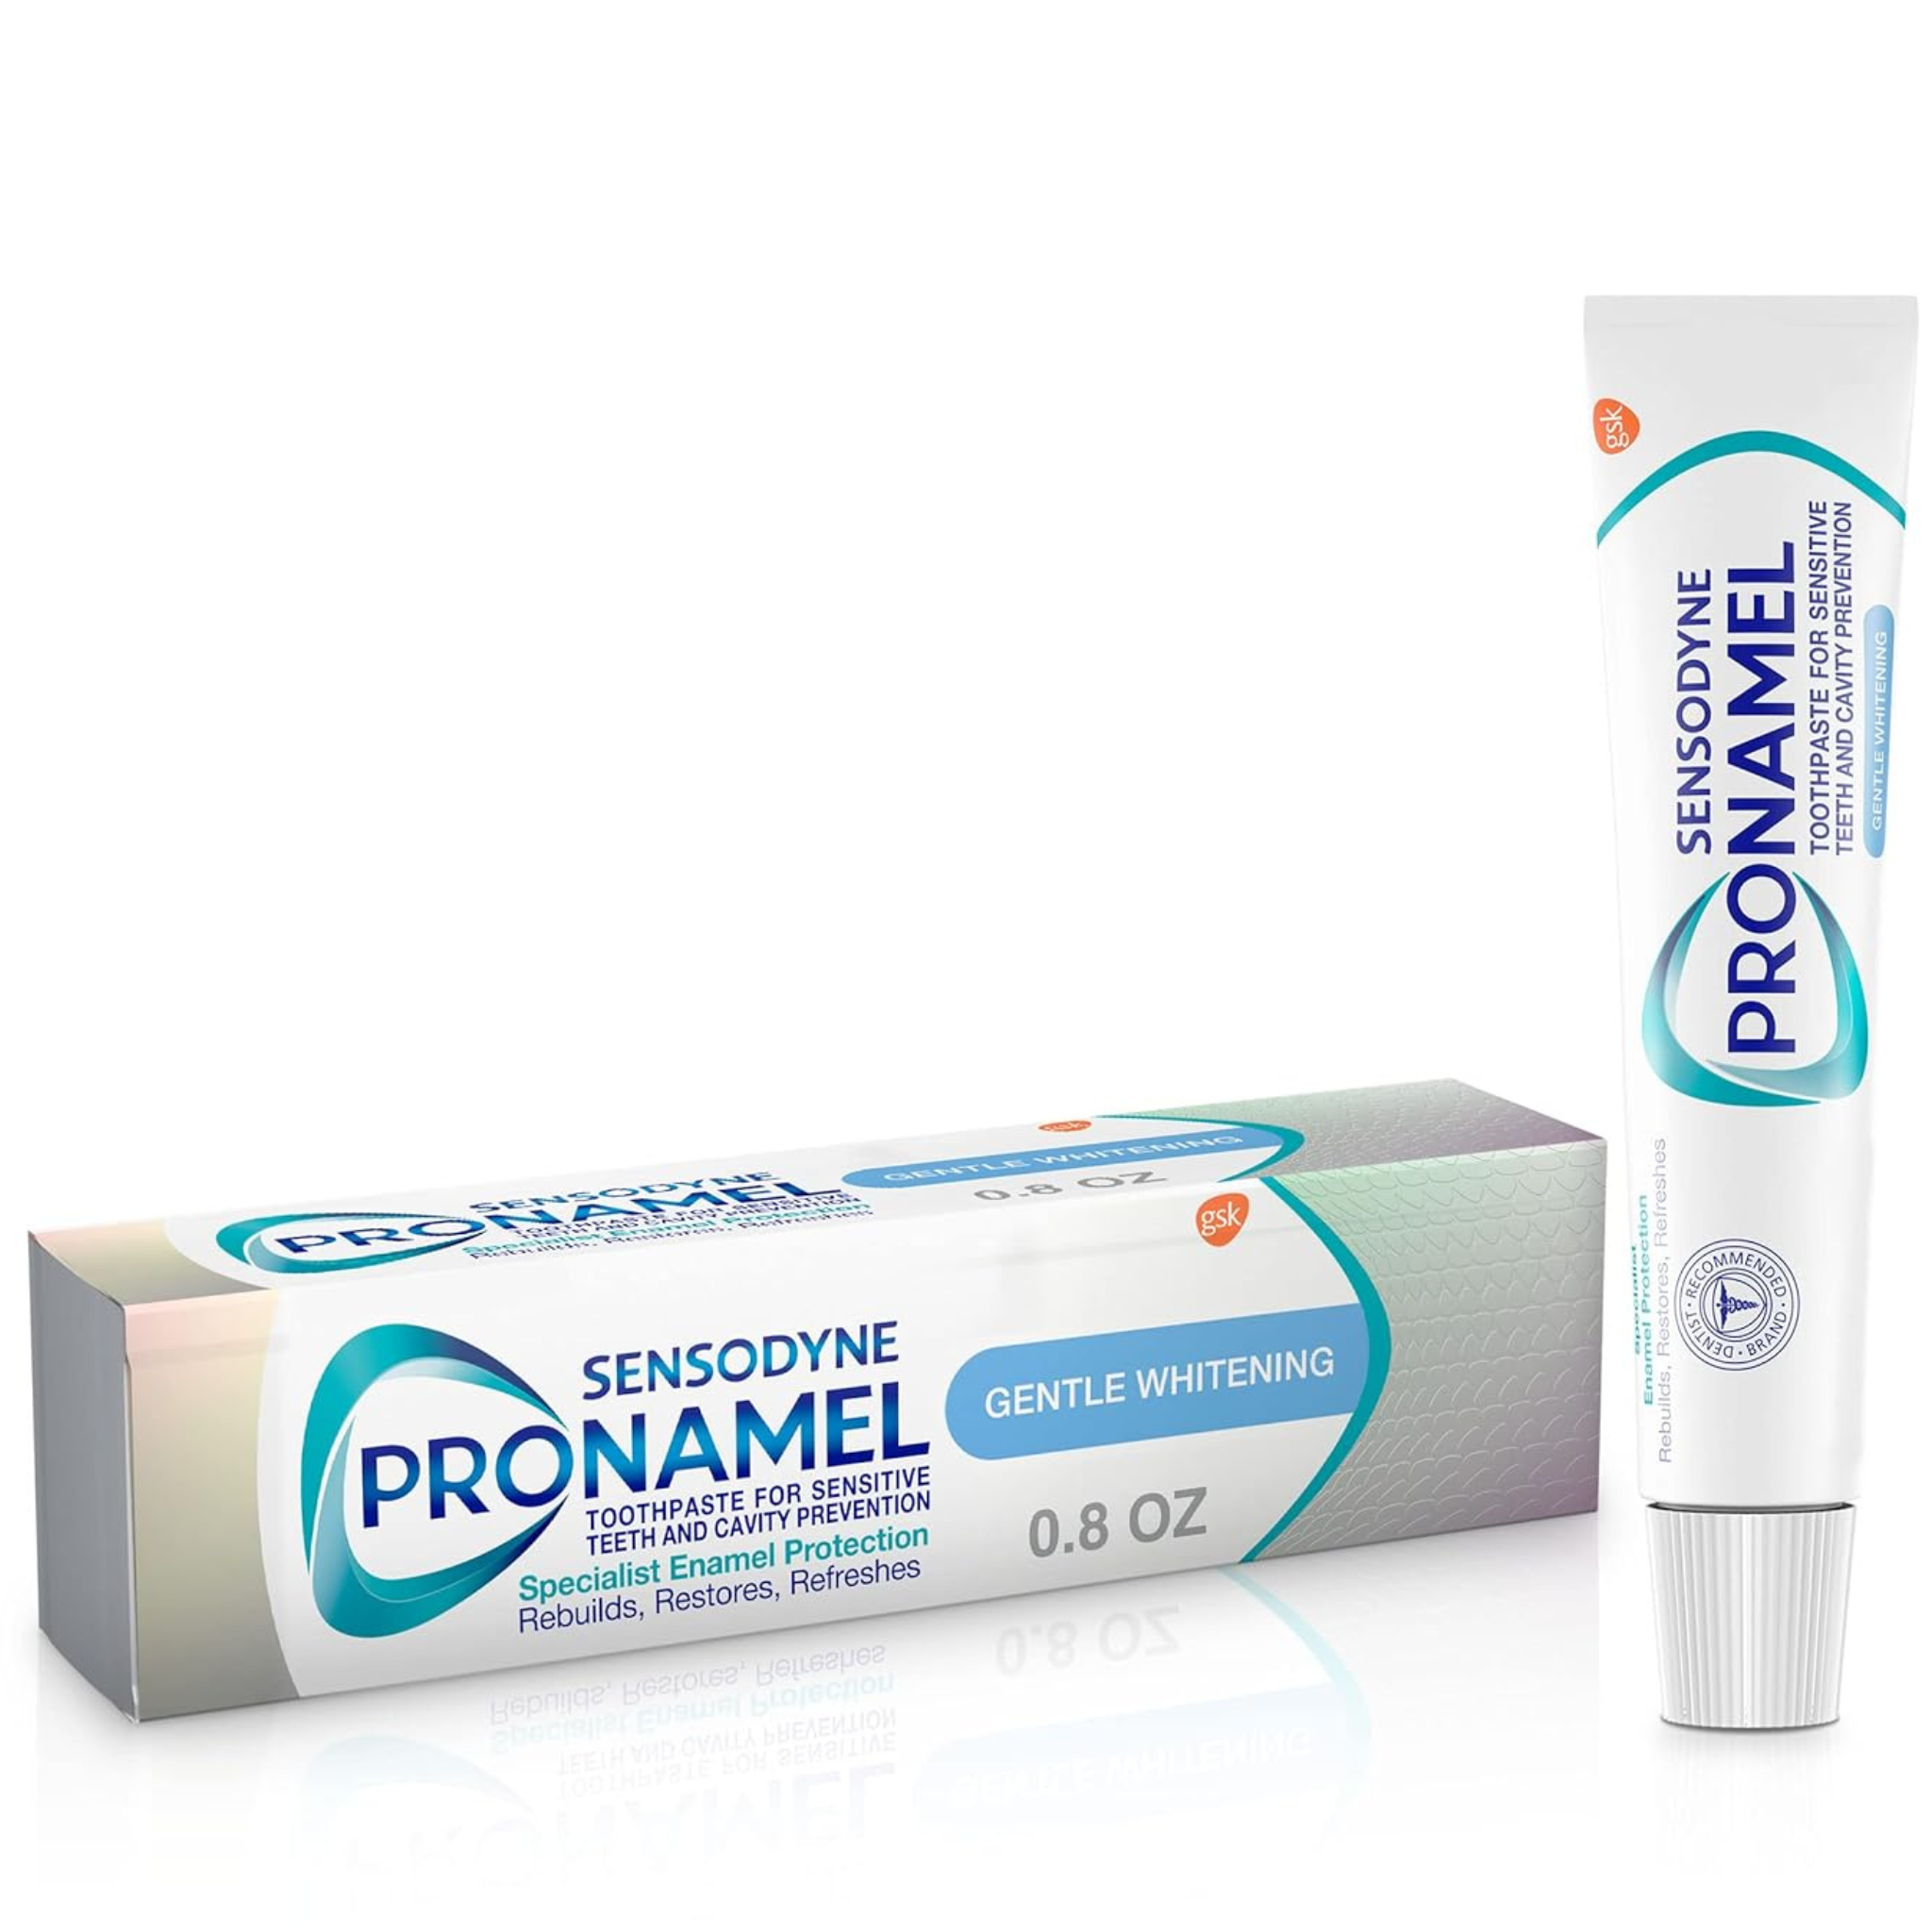 0.8-Oz Sensodyne Pronamel Gentle Whitening Toothpaste (Alpine Breeze)